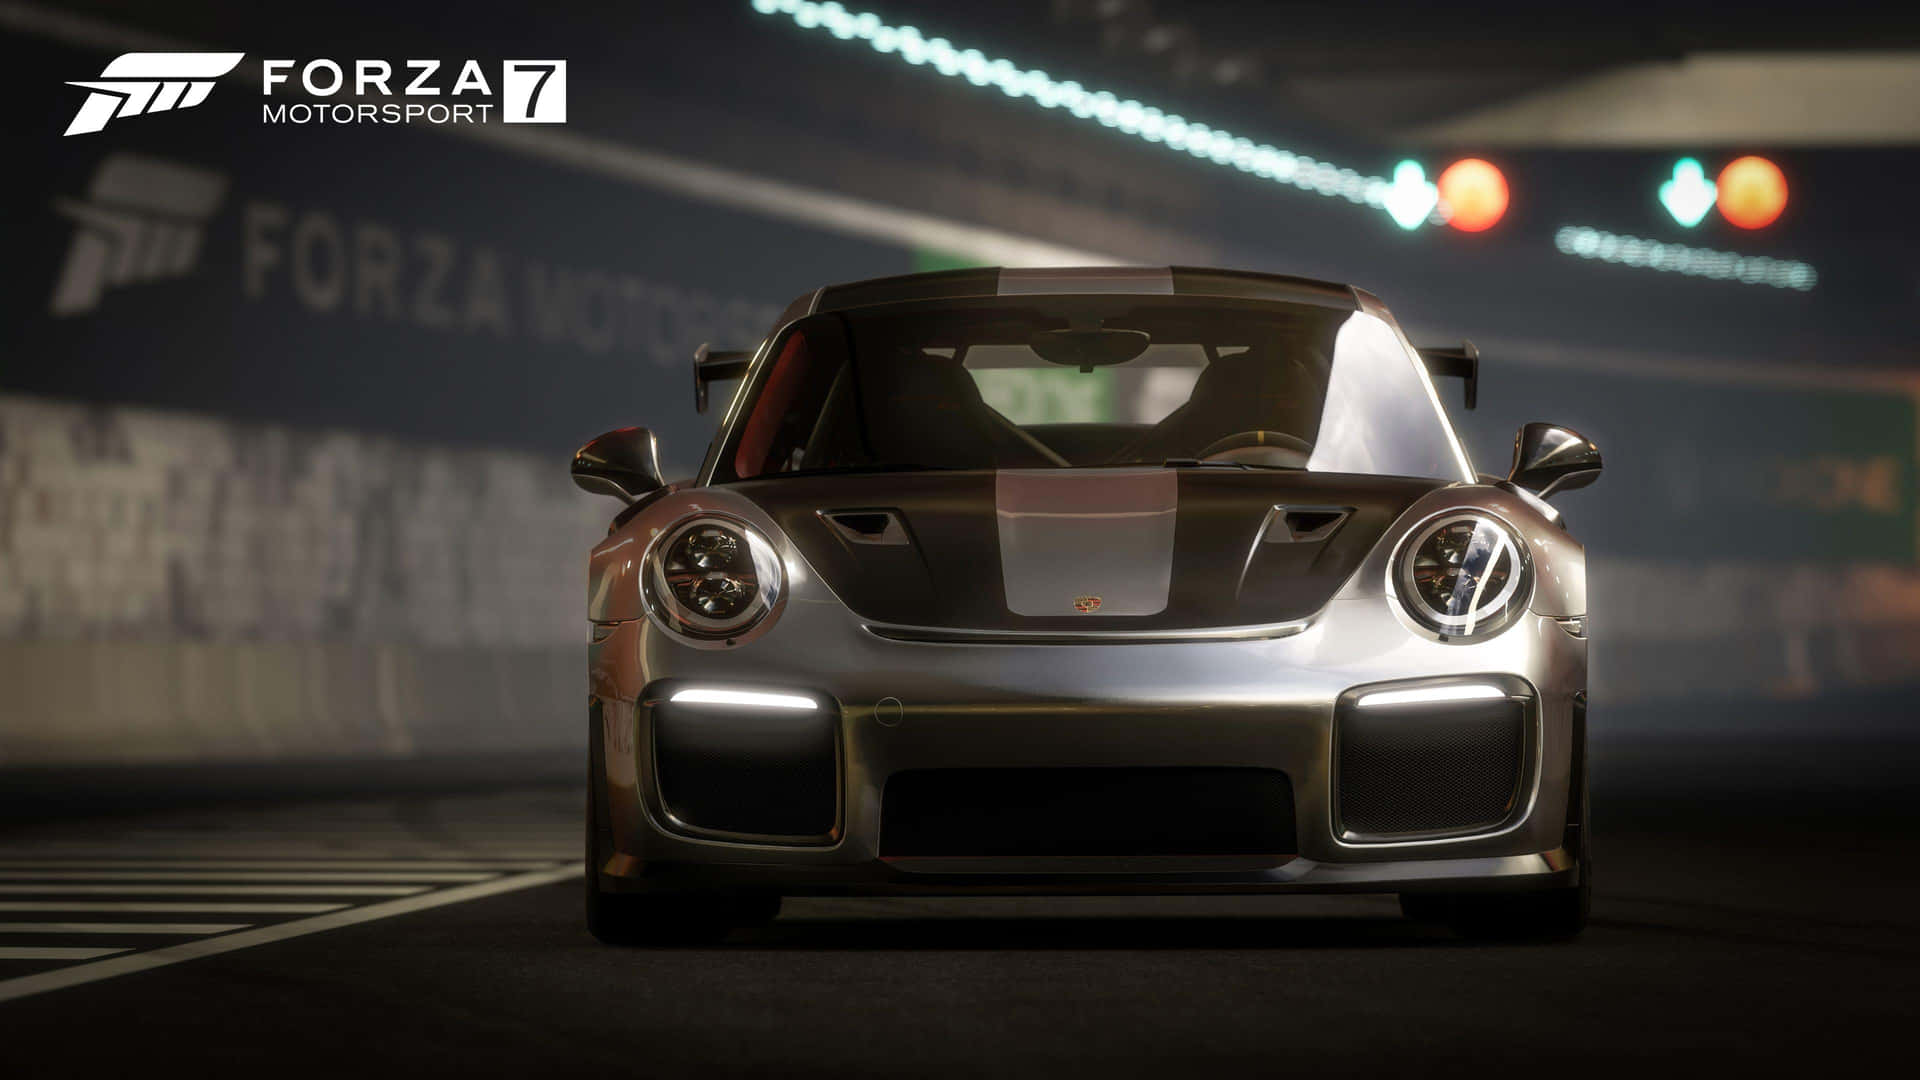 Forza7 Gta V - Porsche 911 Gta V